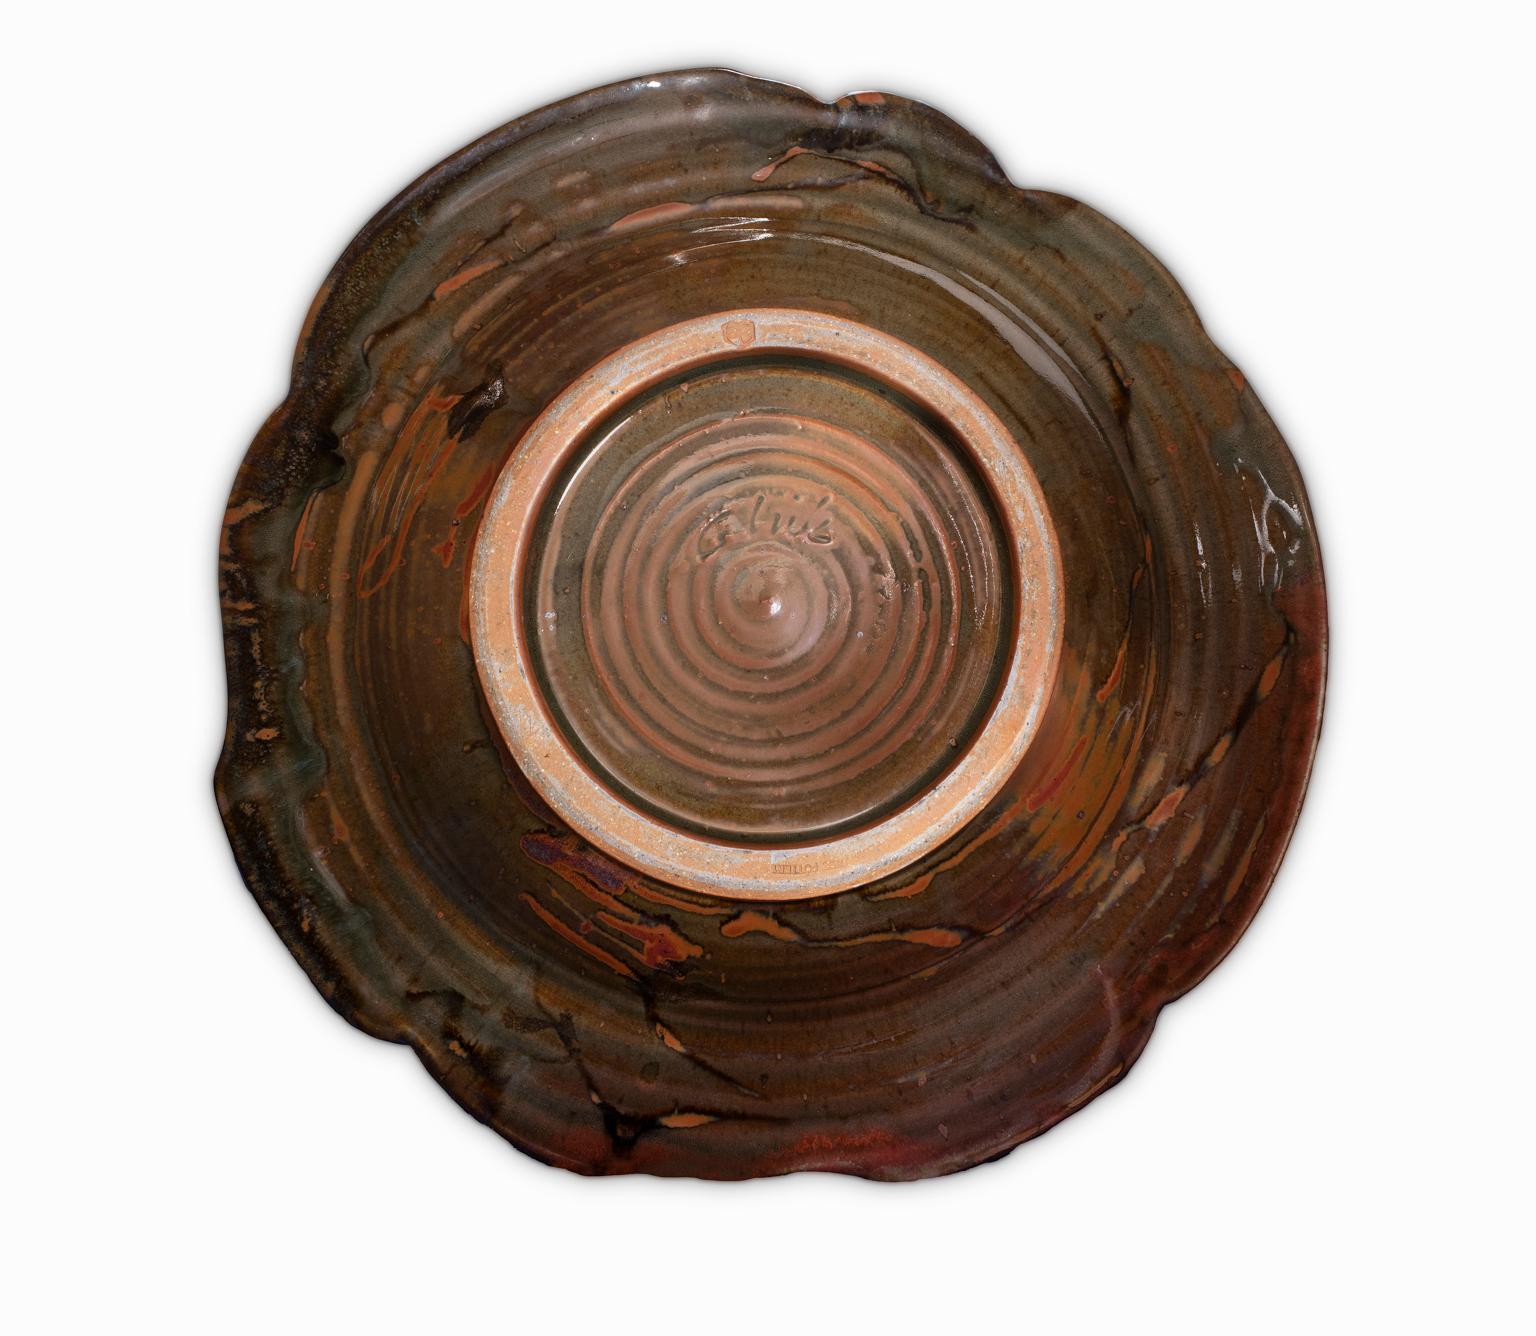 John Glick Plum Street Pottery Ceramic Glazed Bowl/Charger Extra-large  For Sale 1